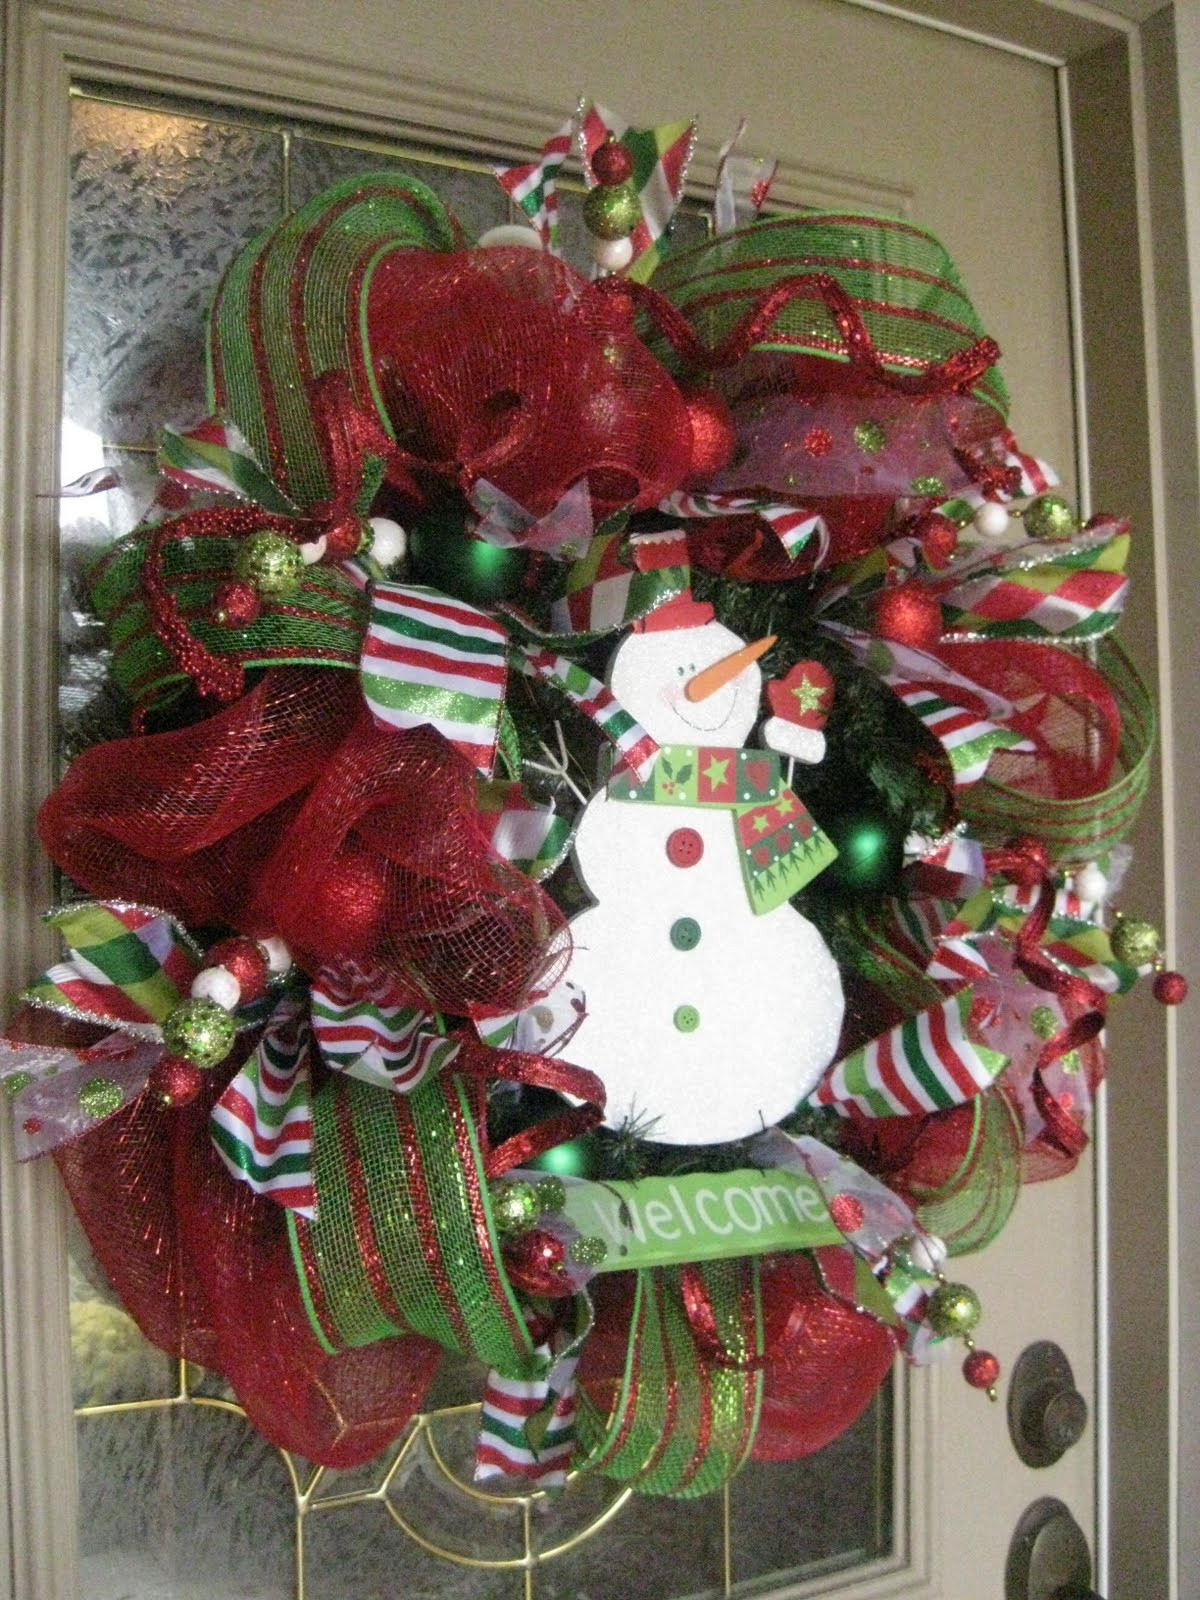 DIY Mesh Christmas Wreath
 Kristen s Creations Christmas Mesh Wreath Tutorial